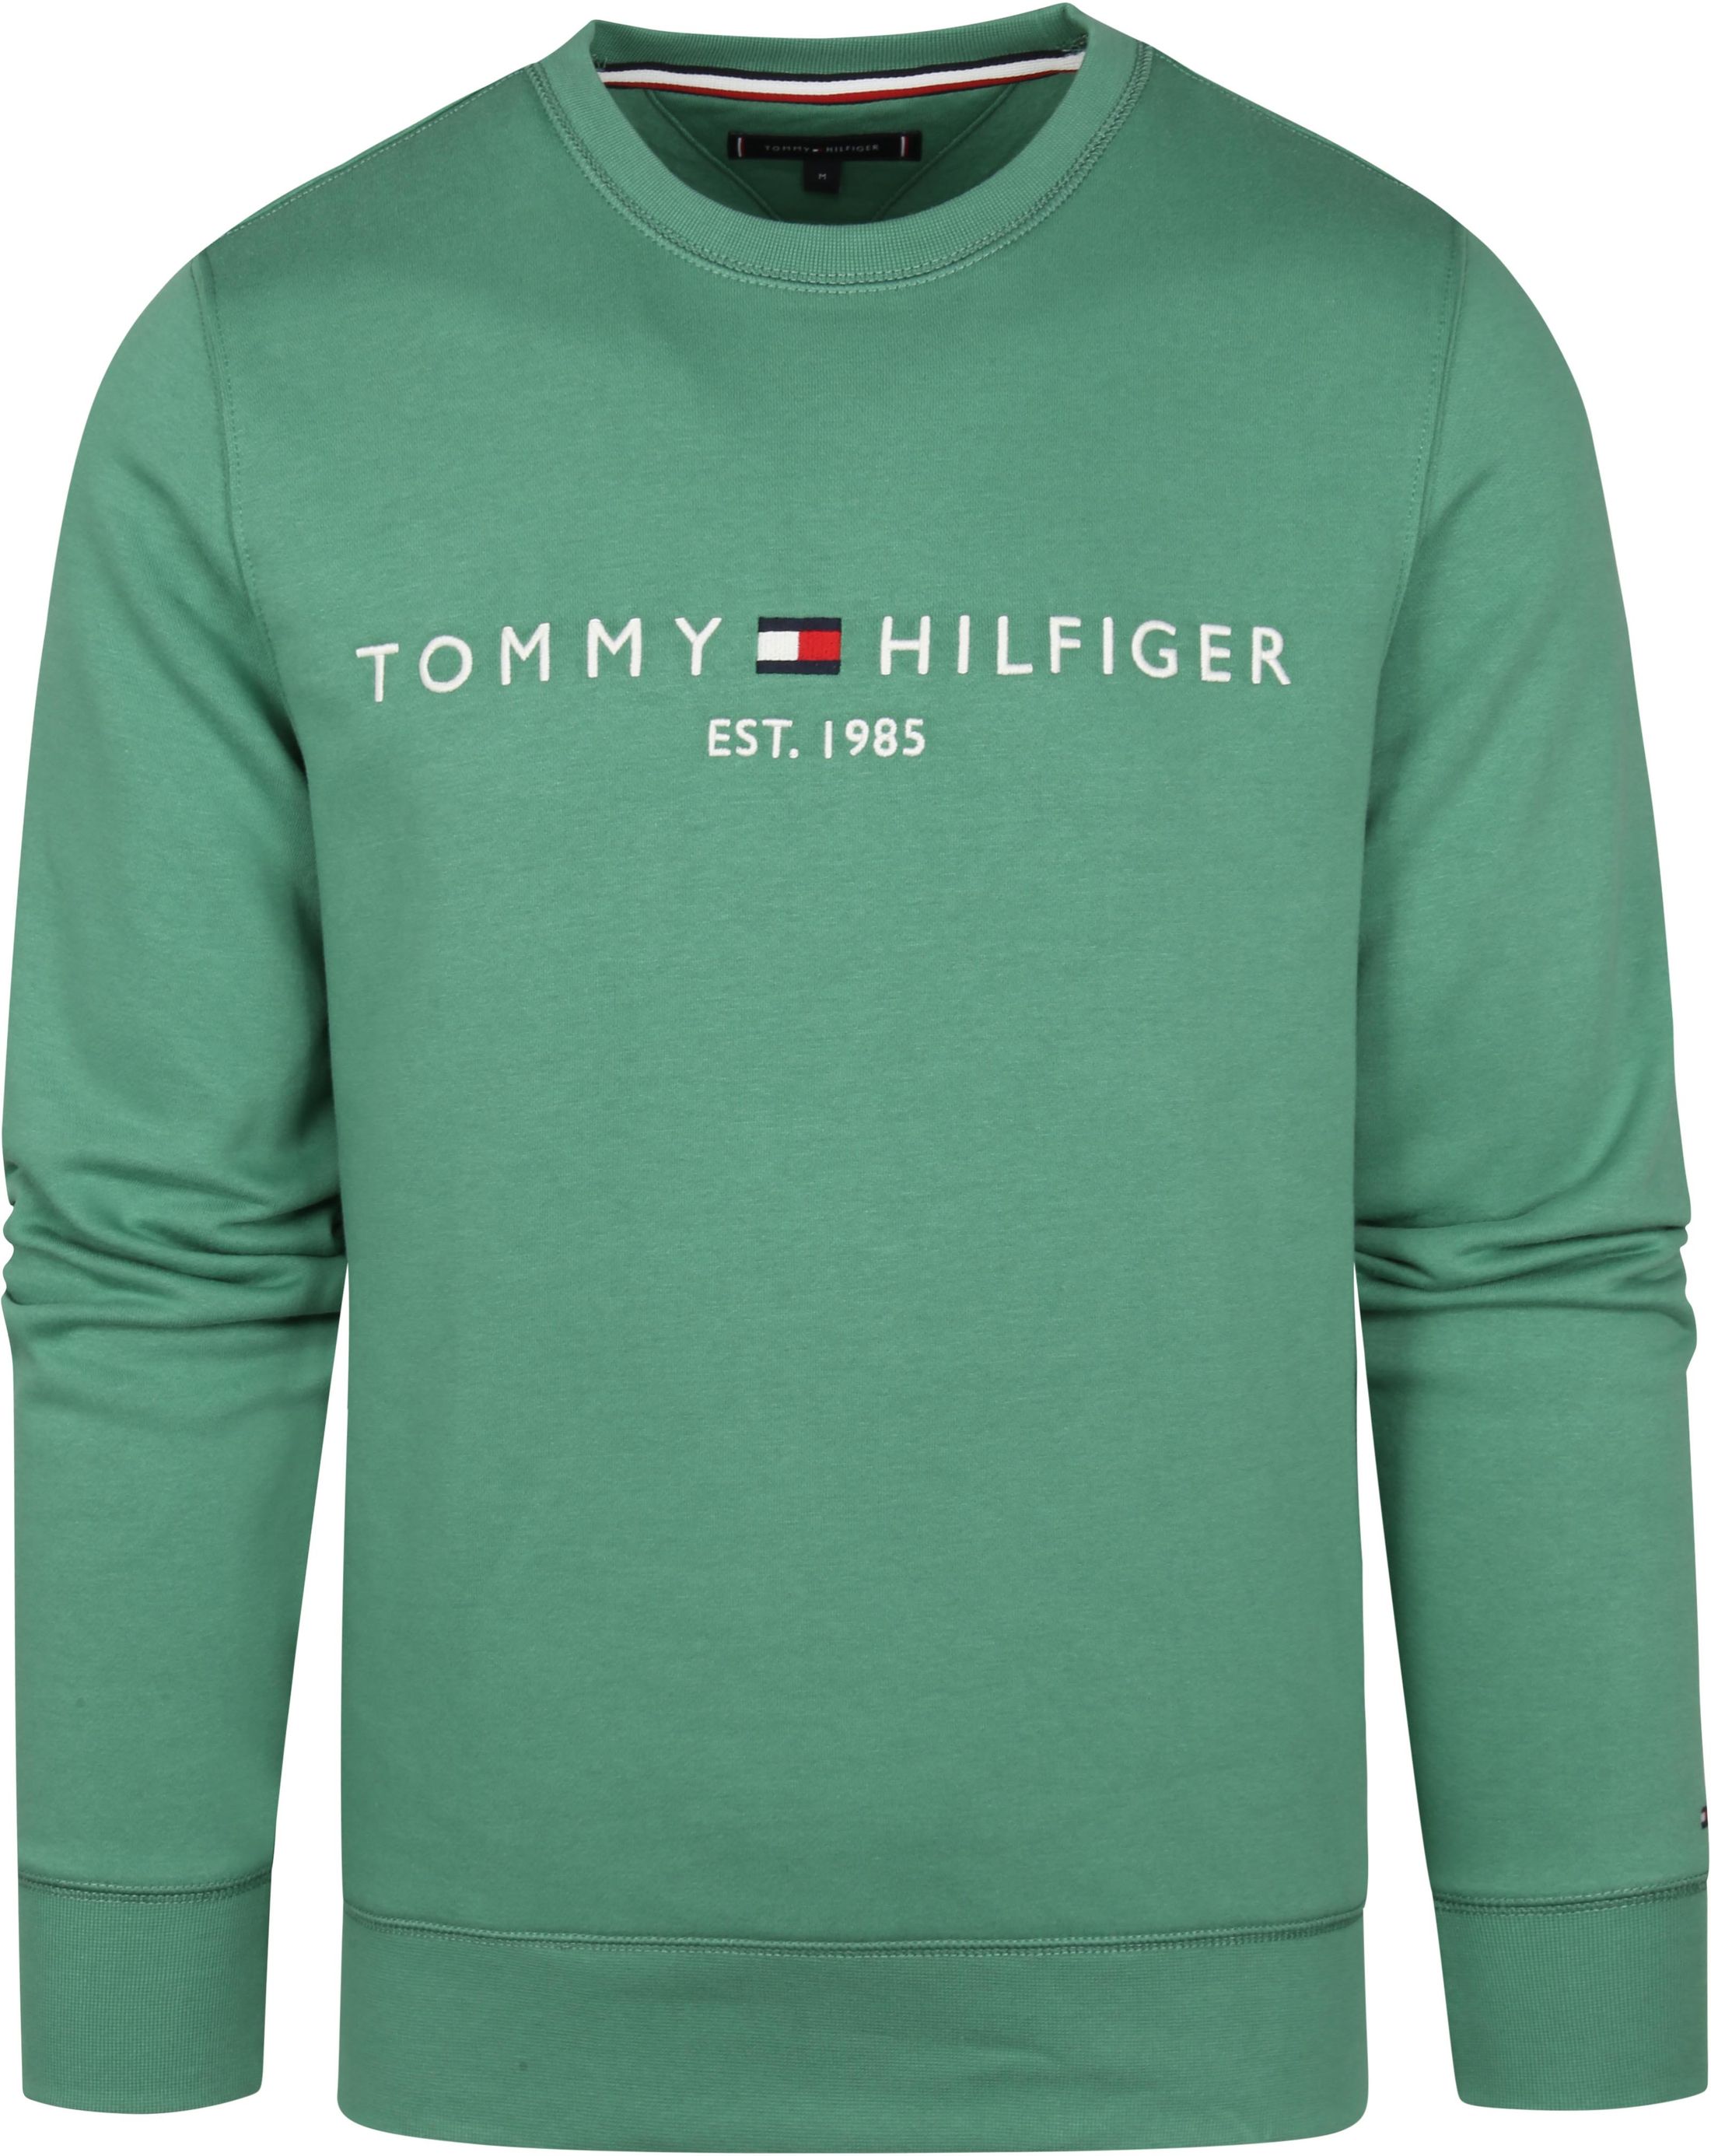 Tommy Hilfiger Sweater Logo Mid Green size L